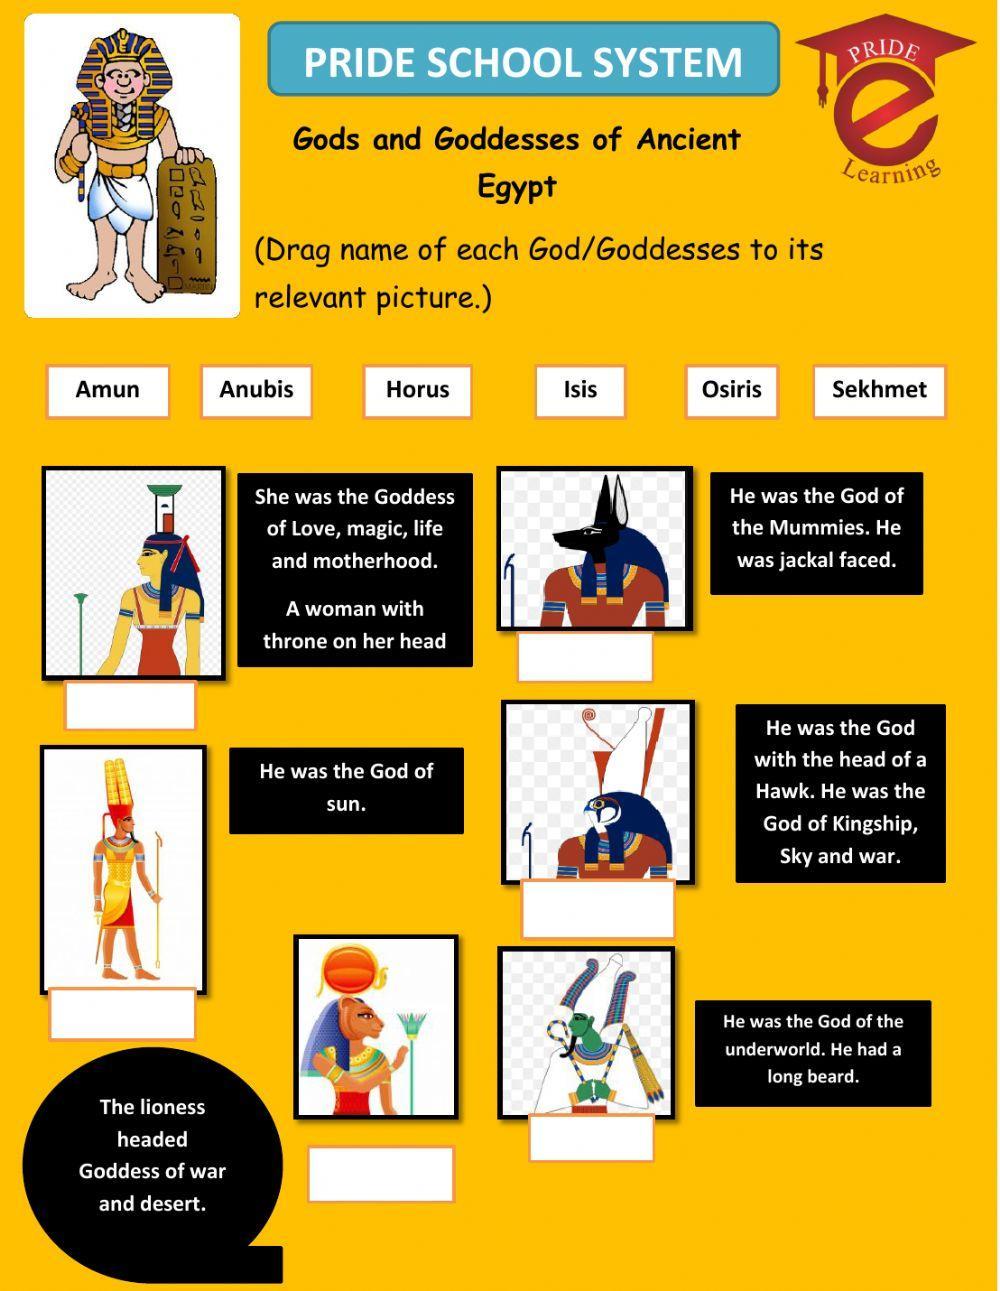 God and Goddesses of Ancient Egypt.